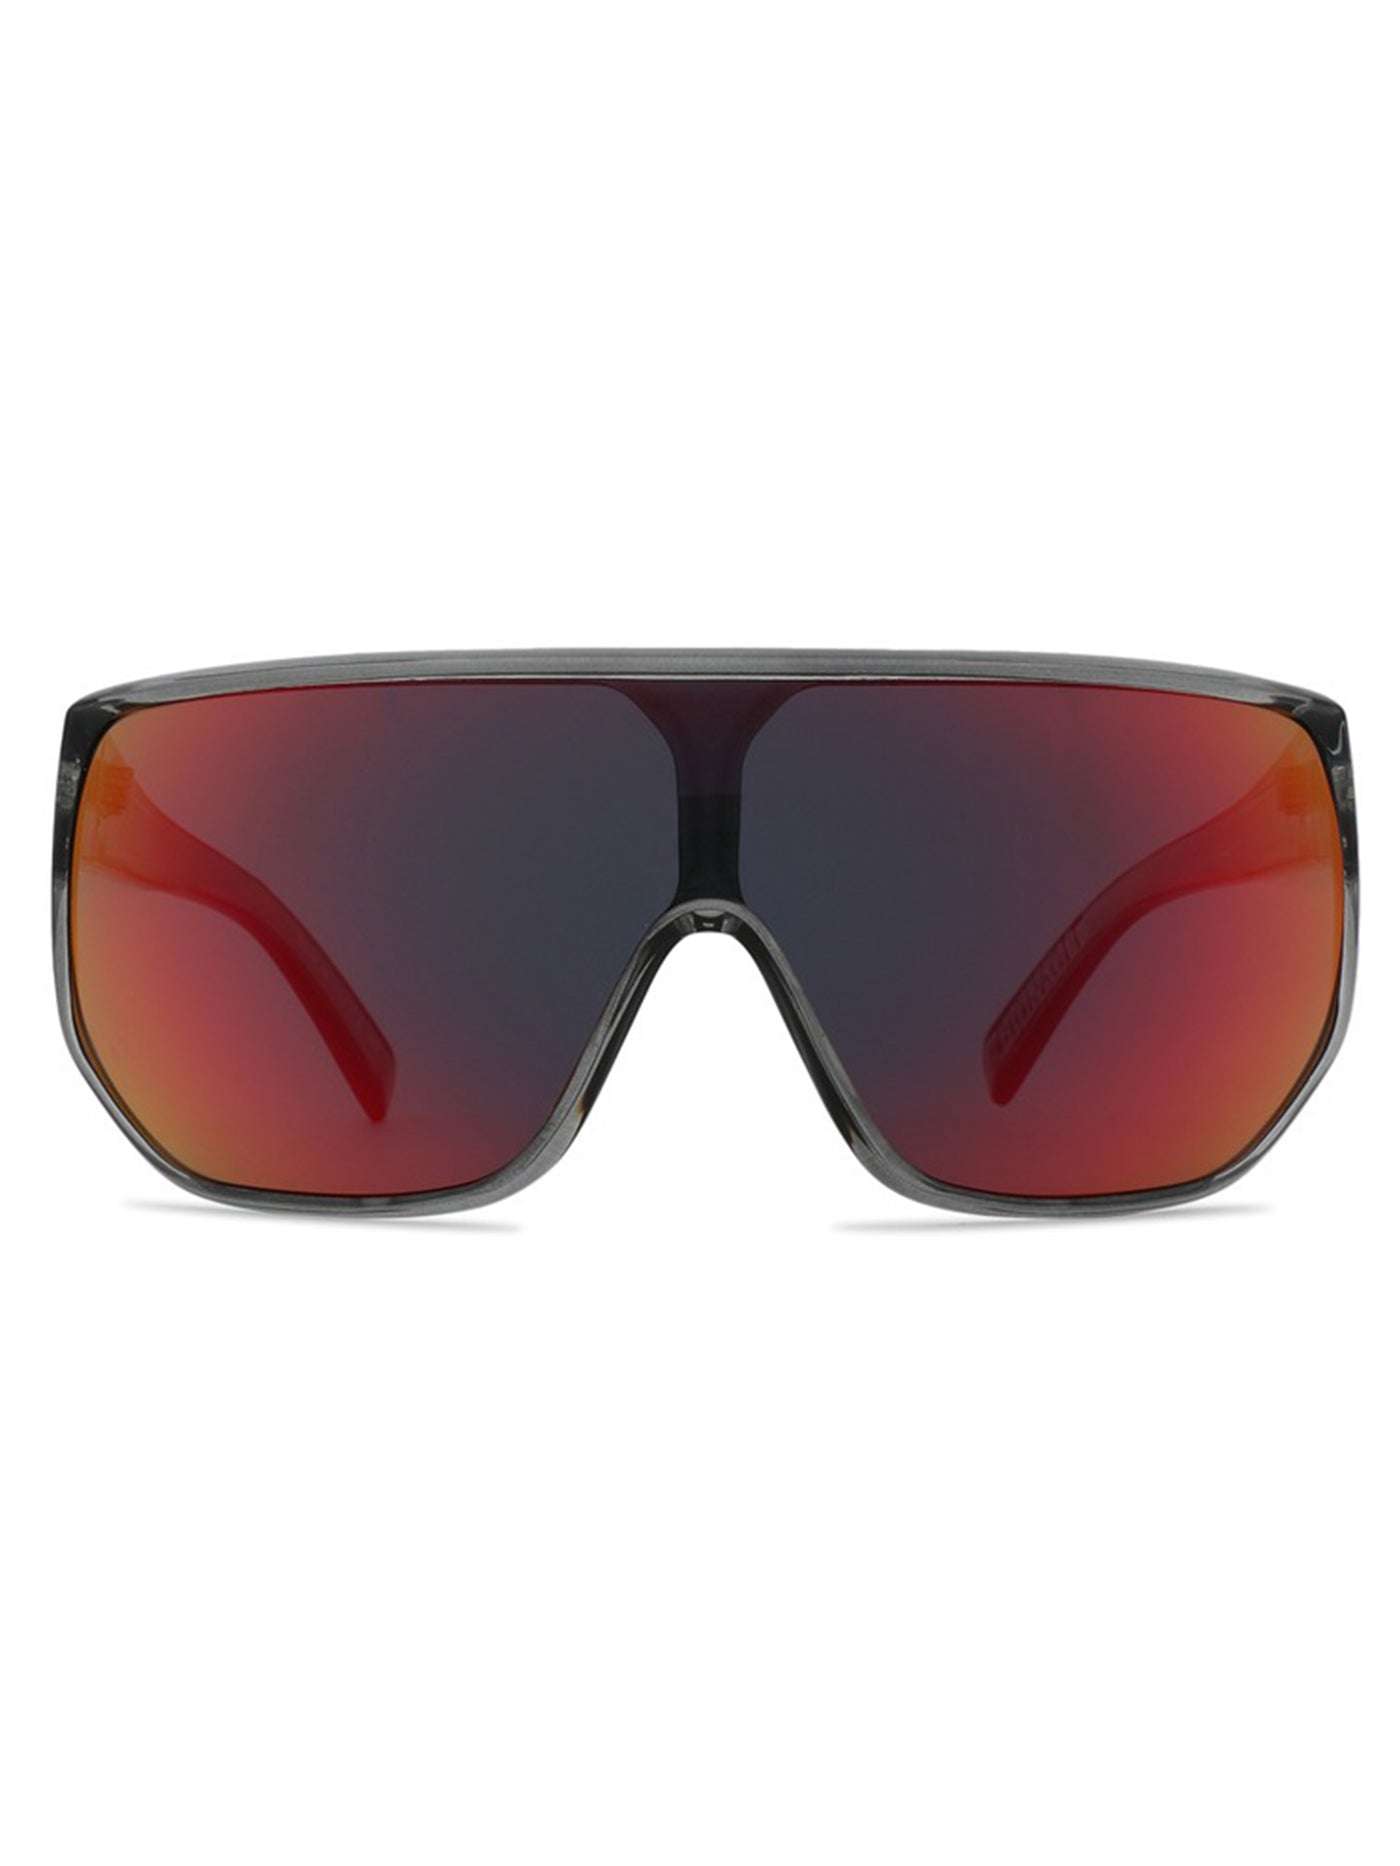 Von Zipper Bionacle Grey Trans Satin/Black Fire Sunglasses